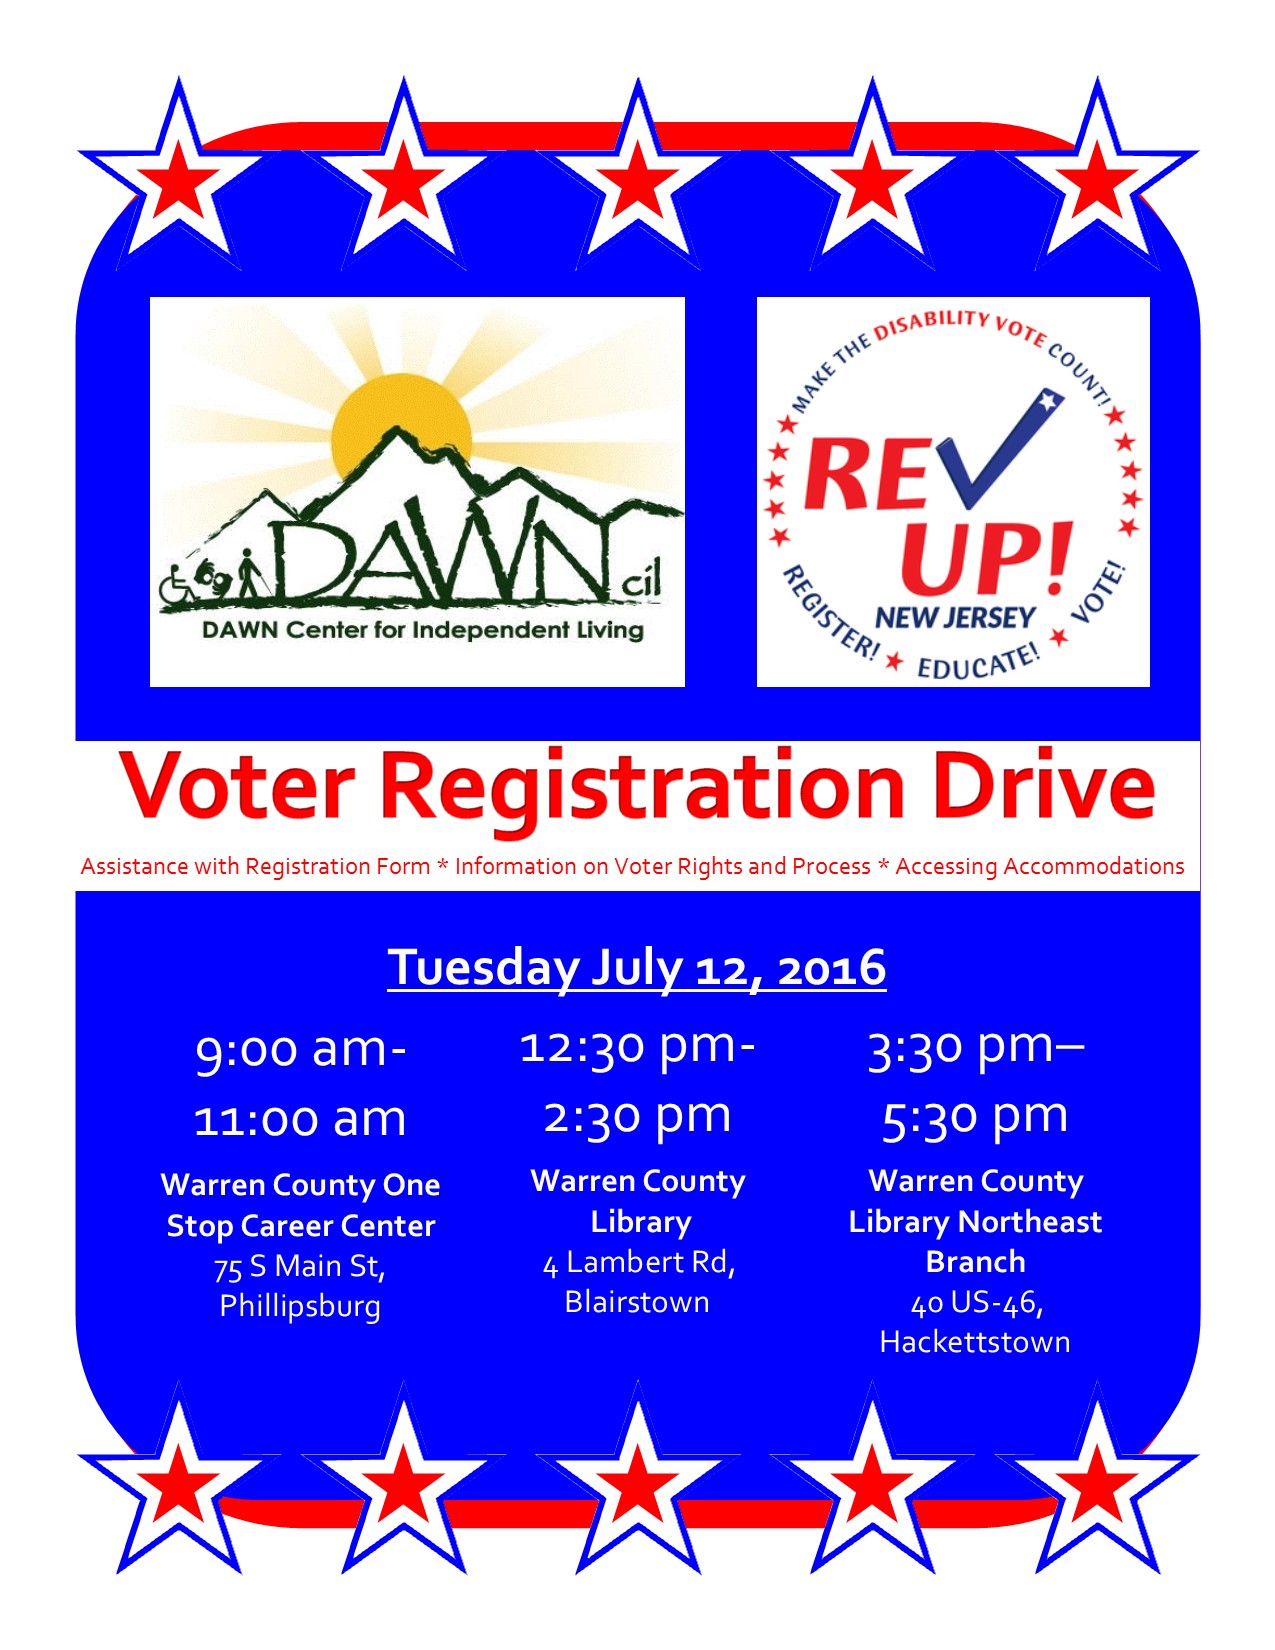 Warren County Voter Registration Day